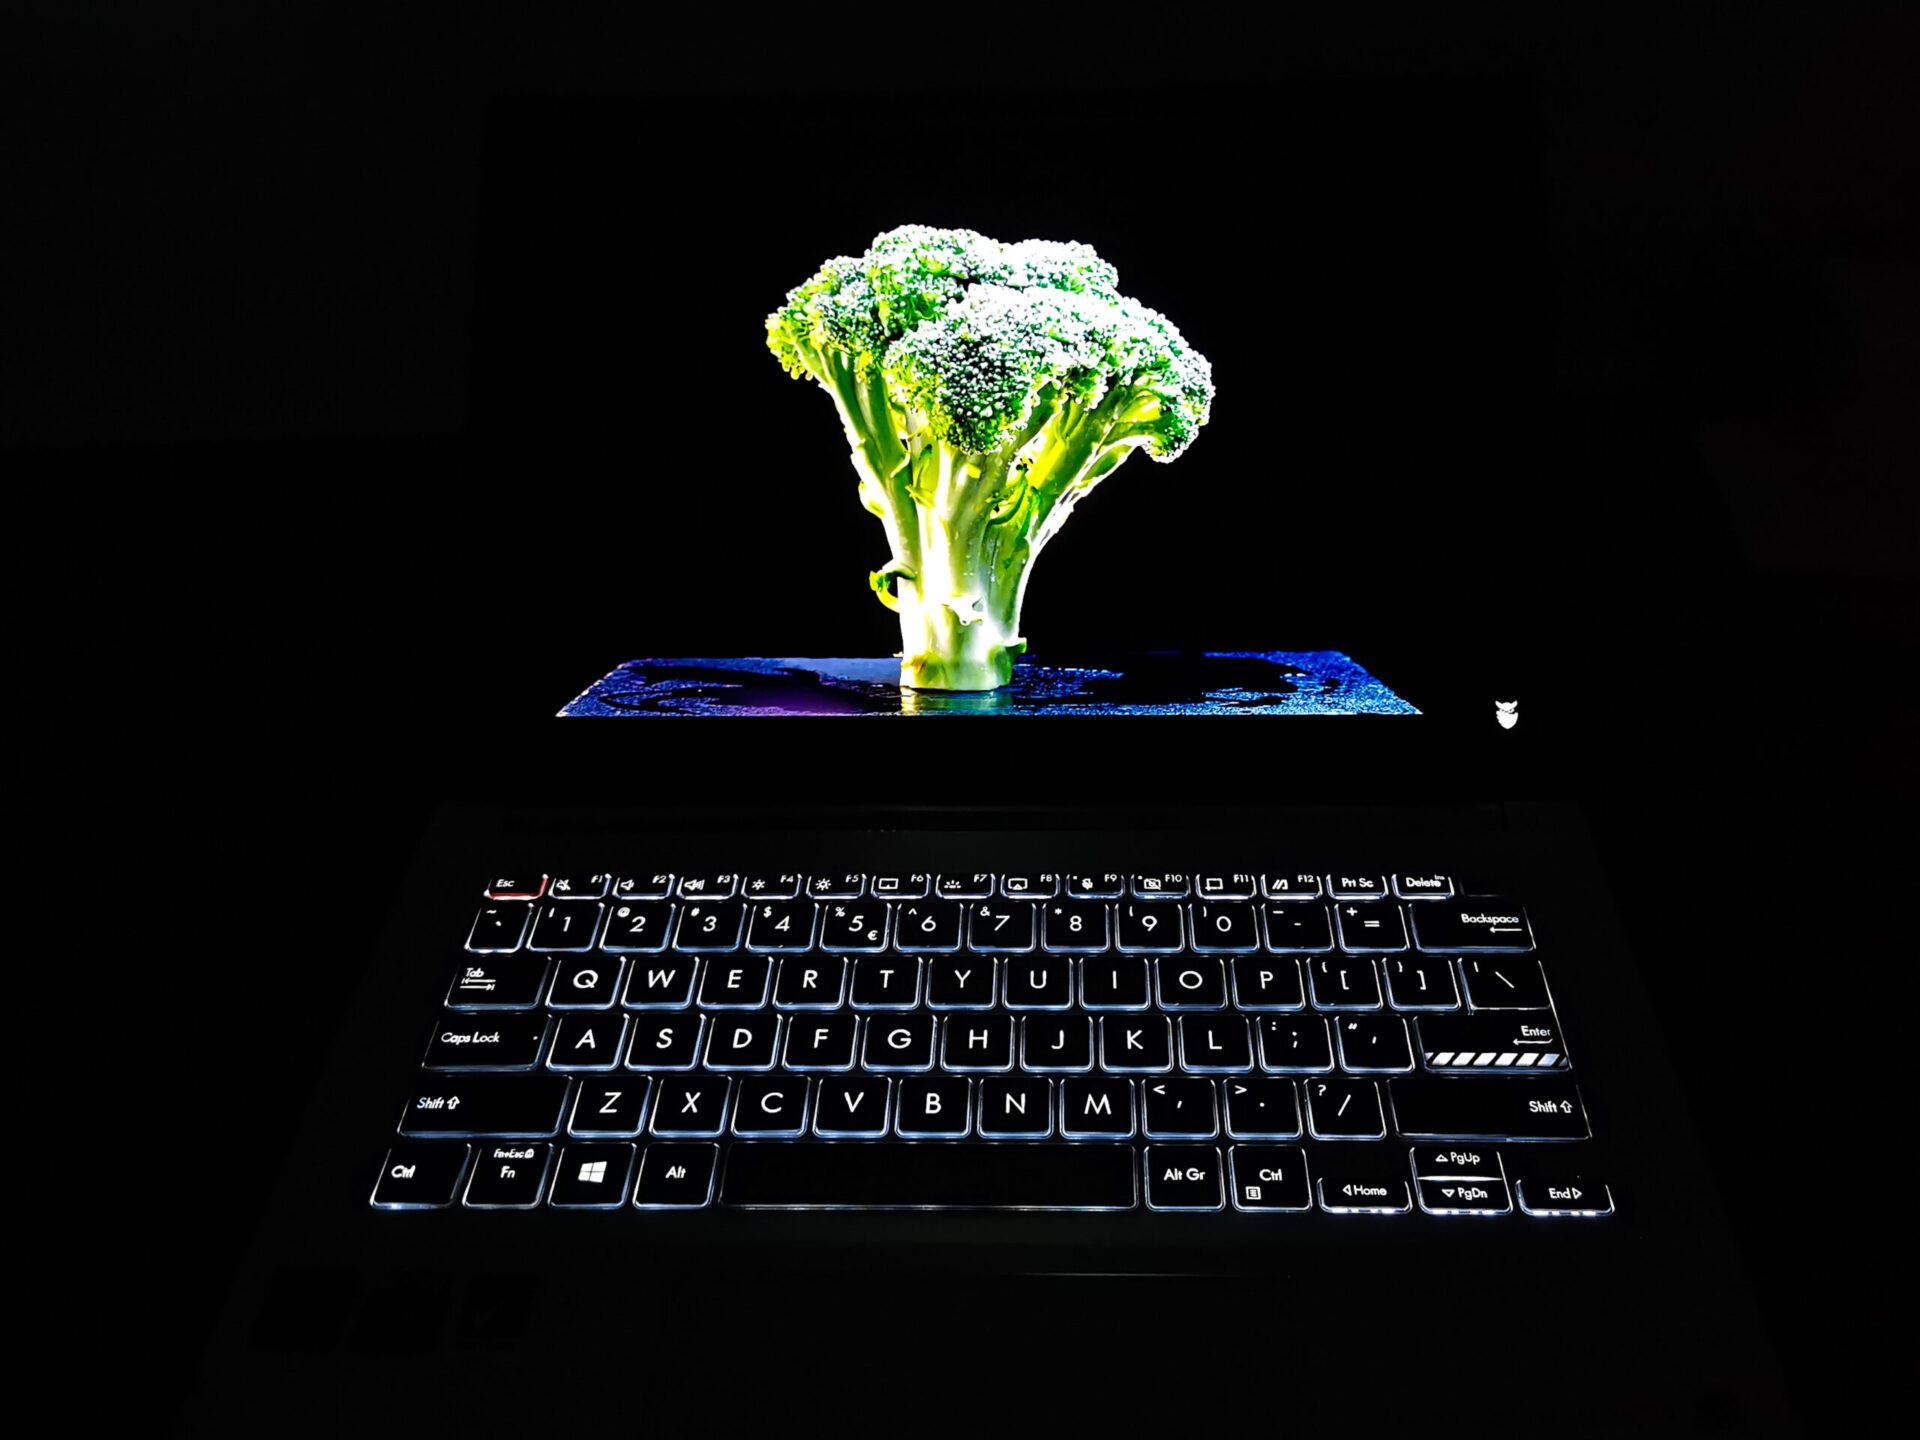 Asus Vivobook Pro 14X OLED